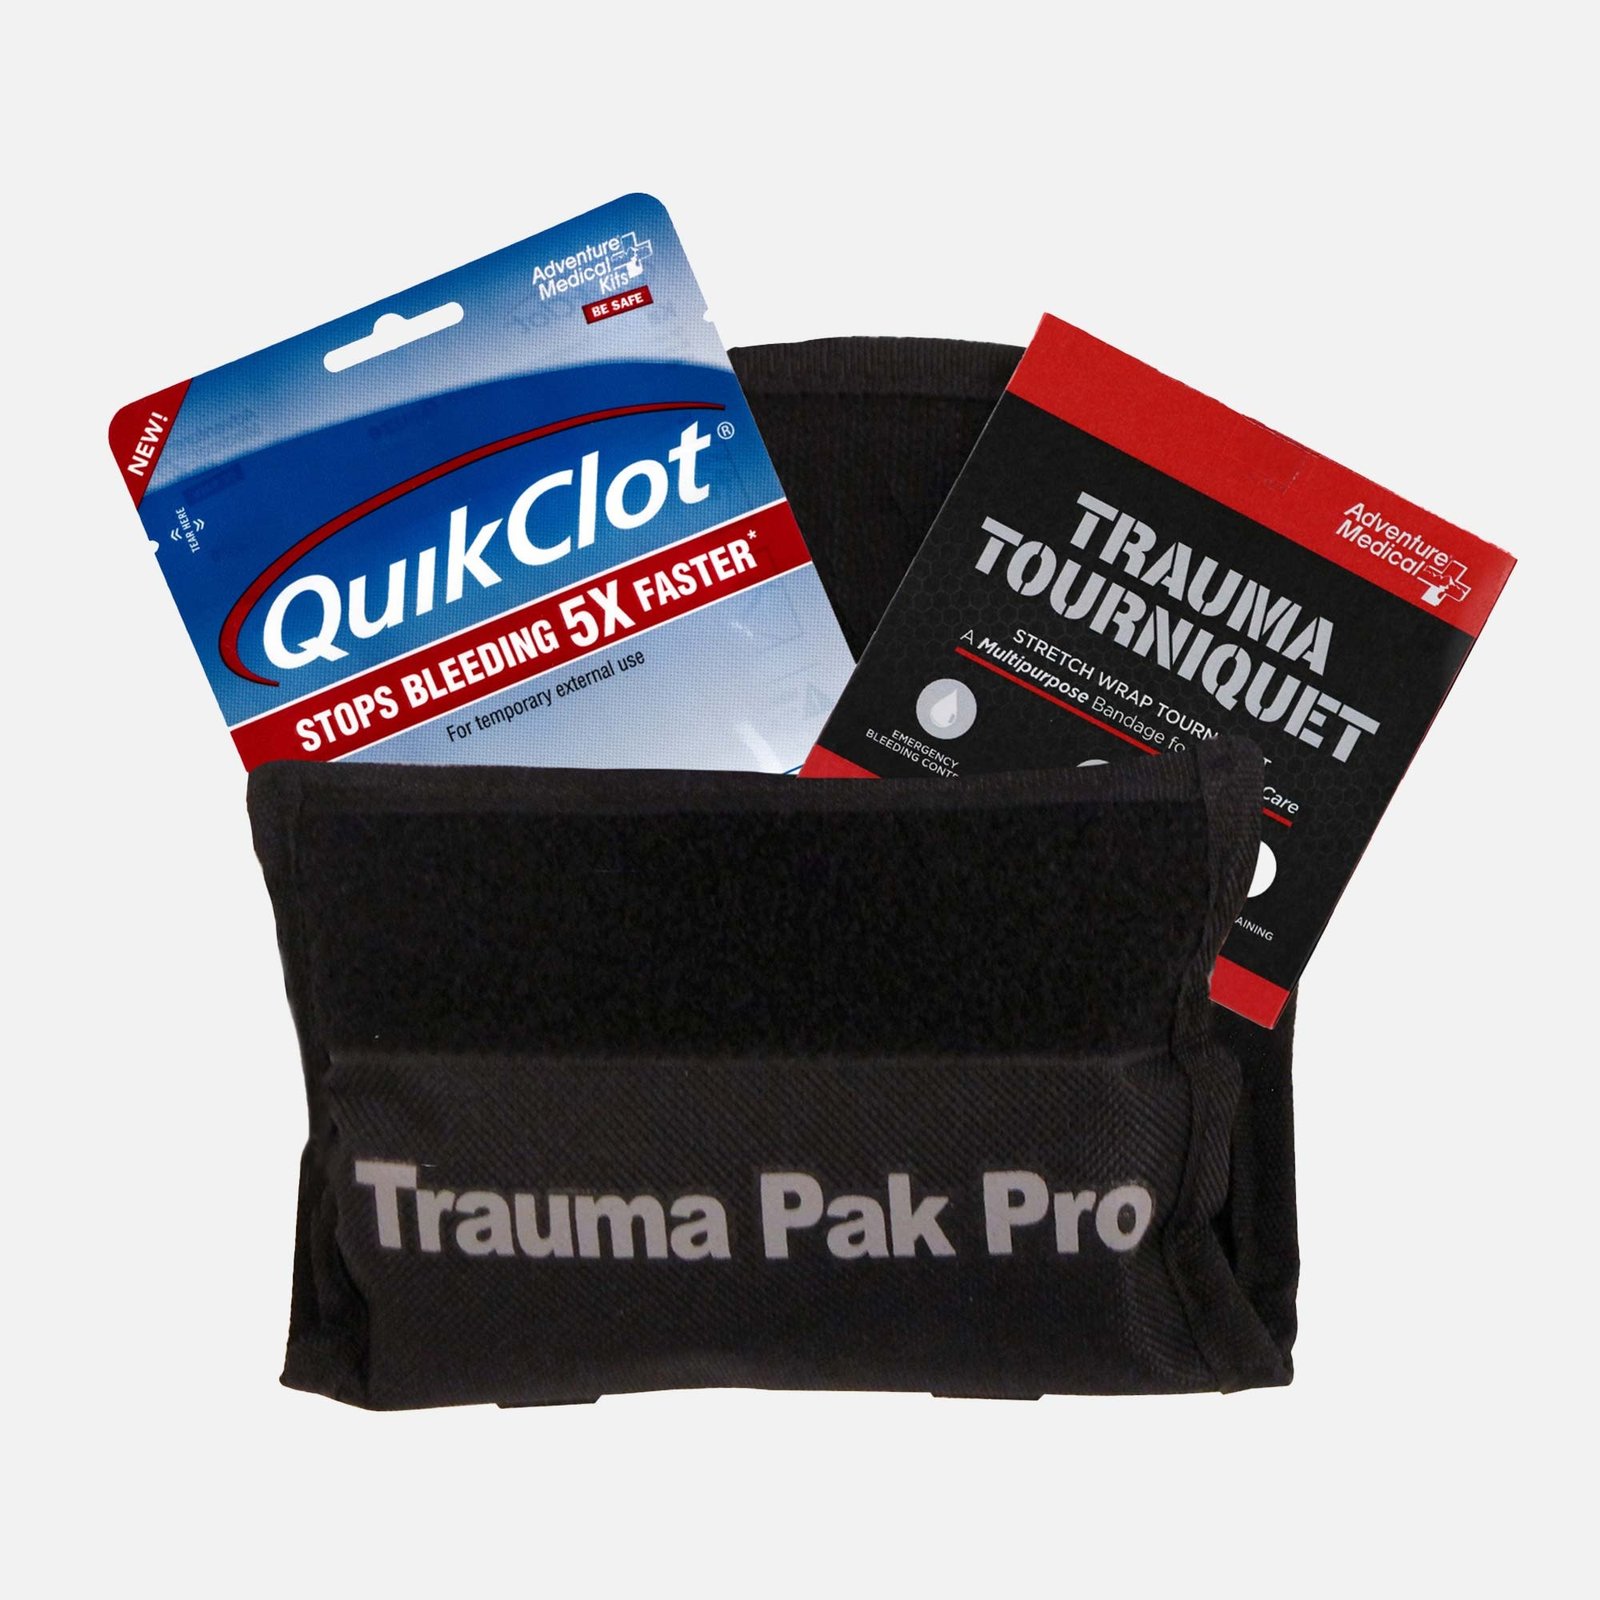 adventure medical kits trauma pak with quikclot 1 kit